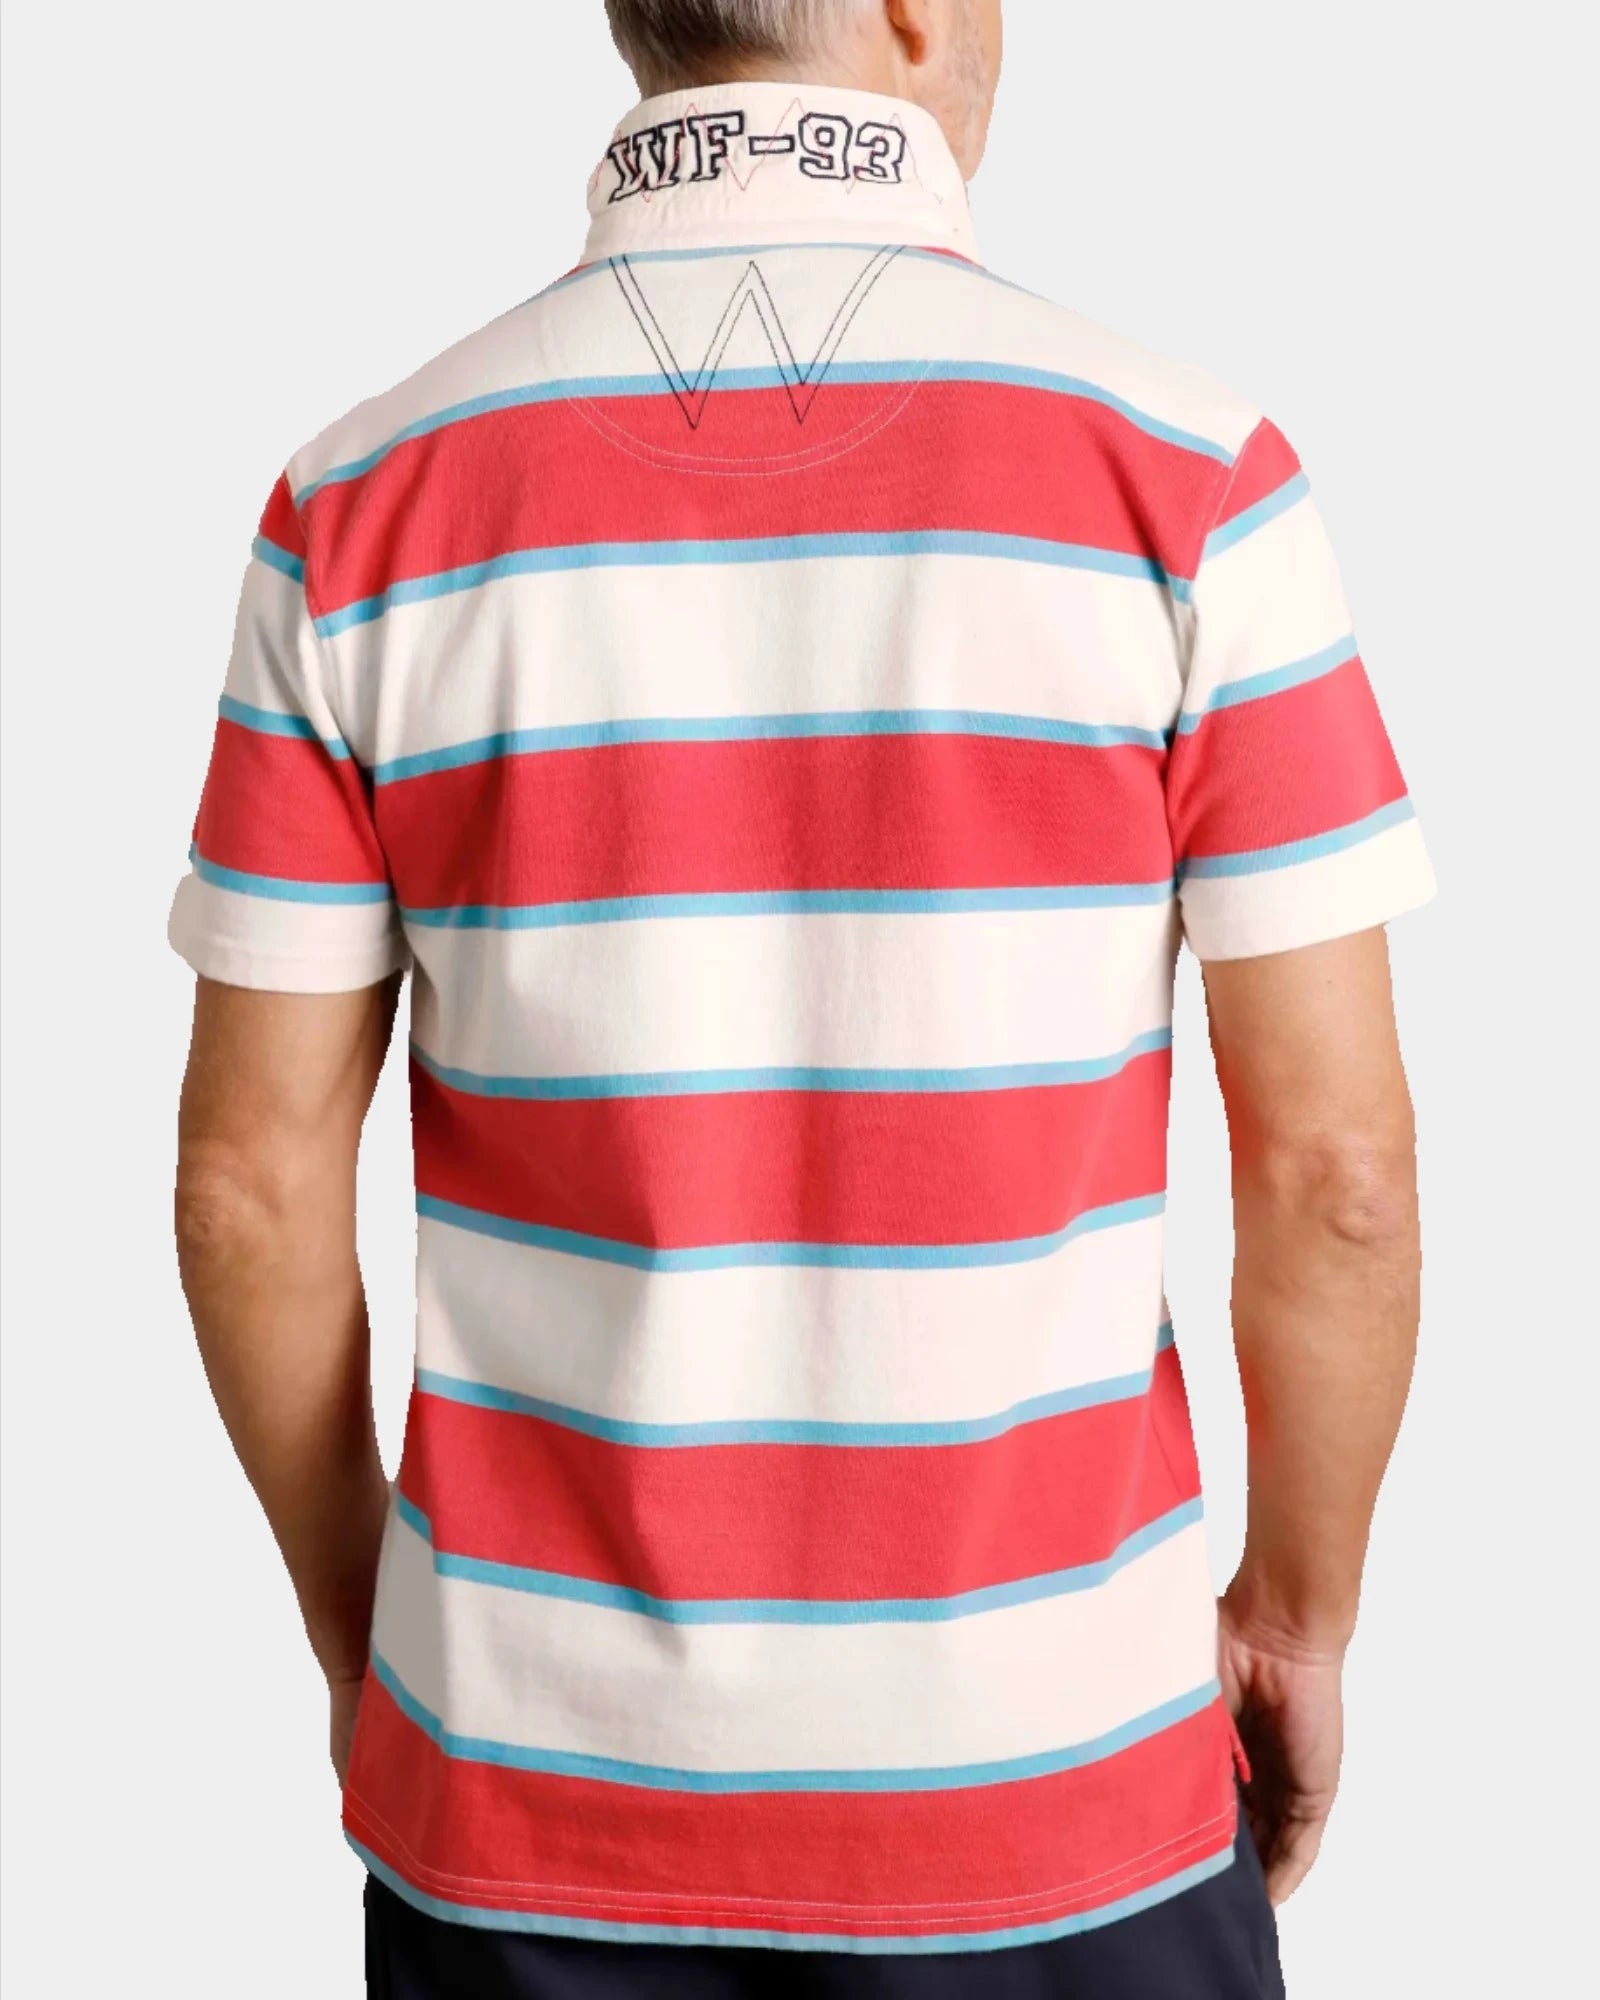 Rossett Radical Red Organic Cotton Short Sleeve Rugby Shirt